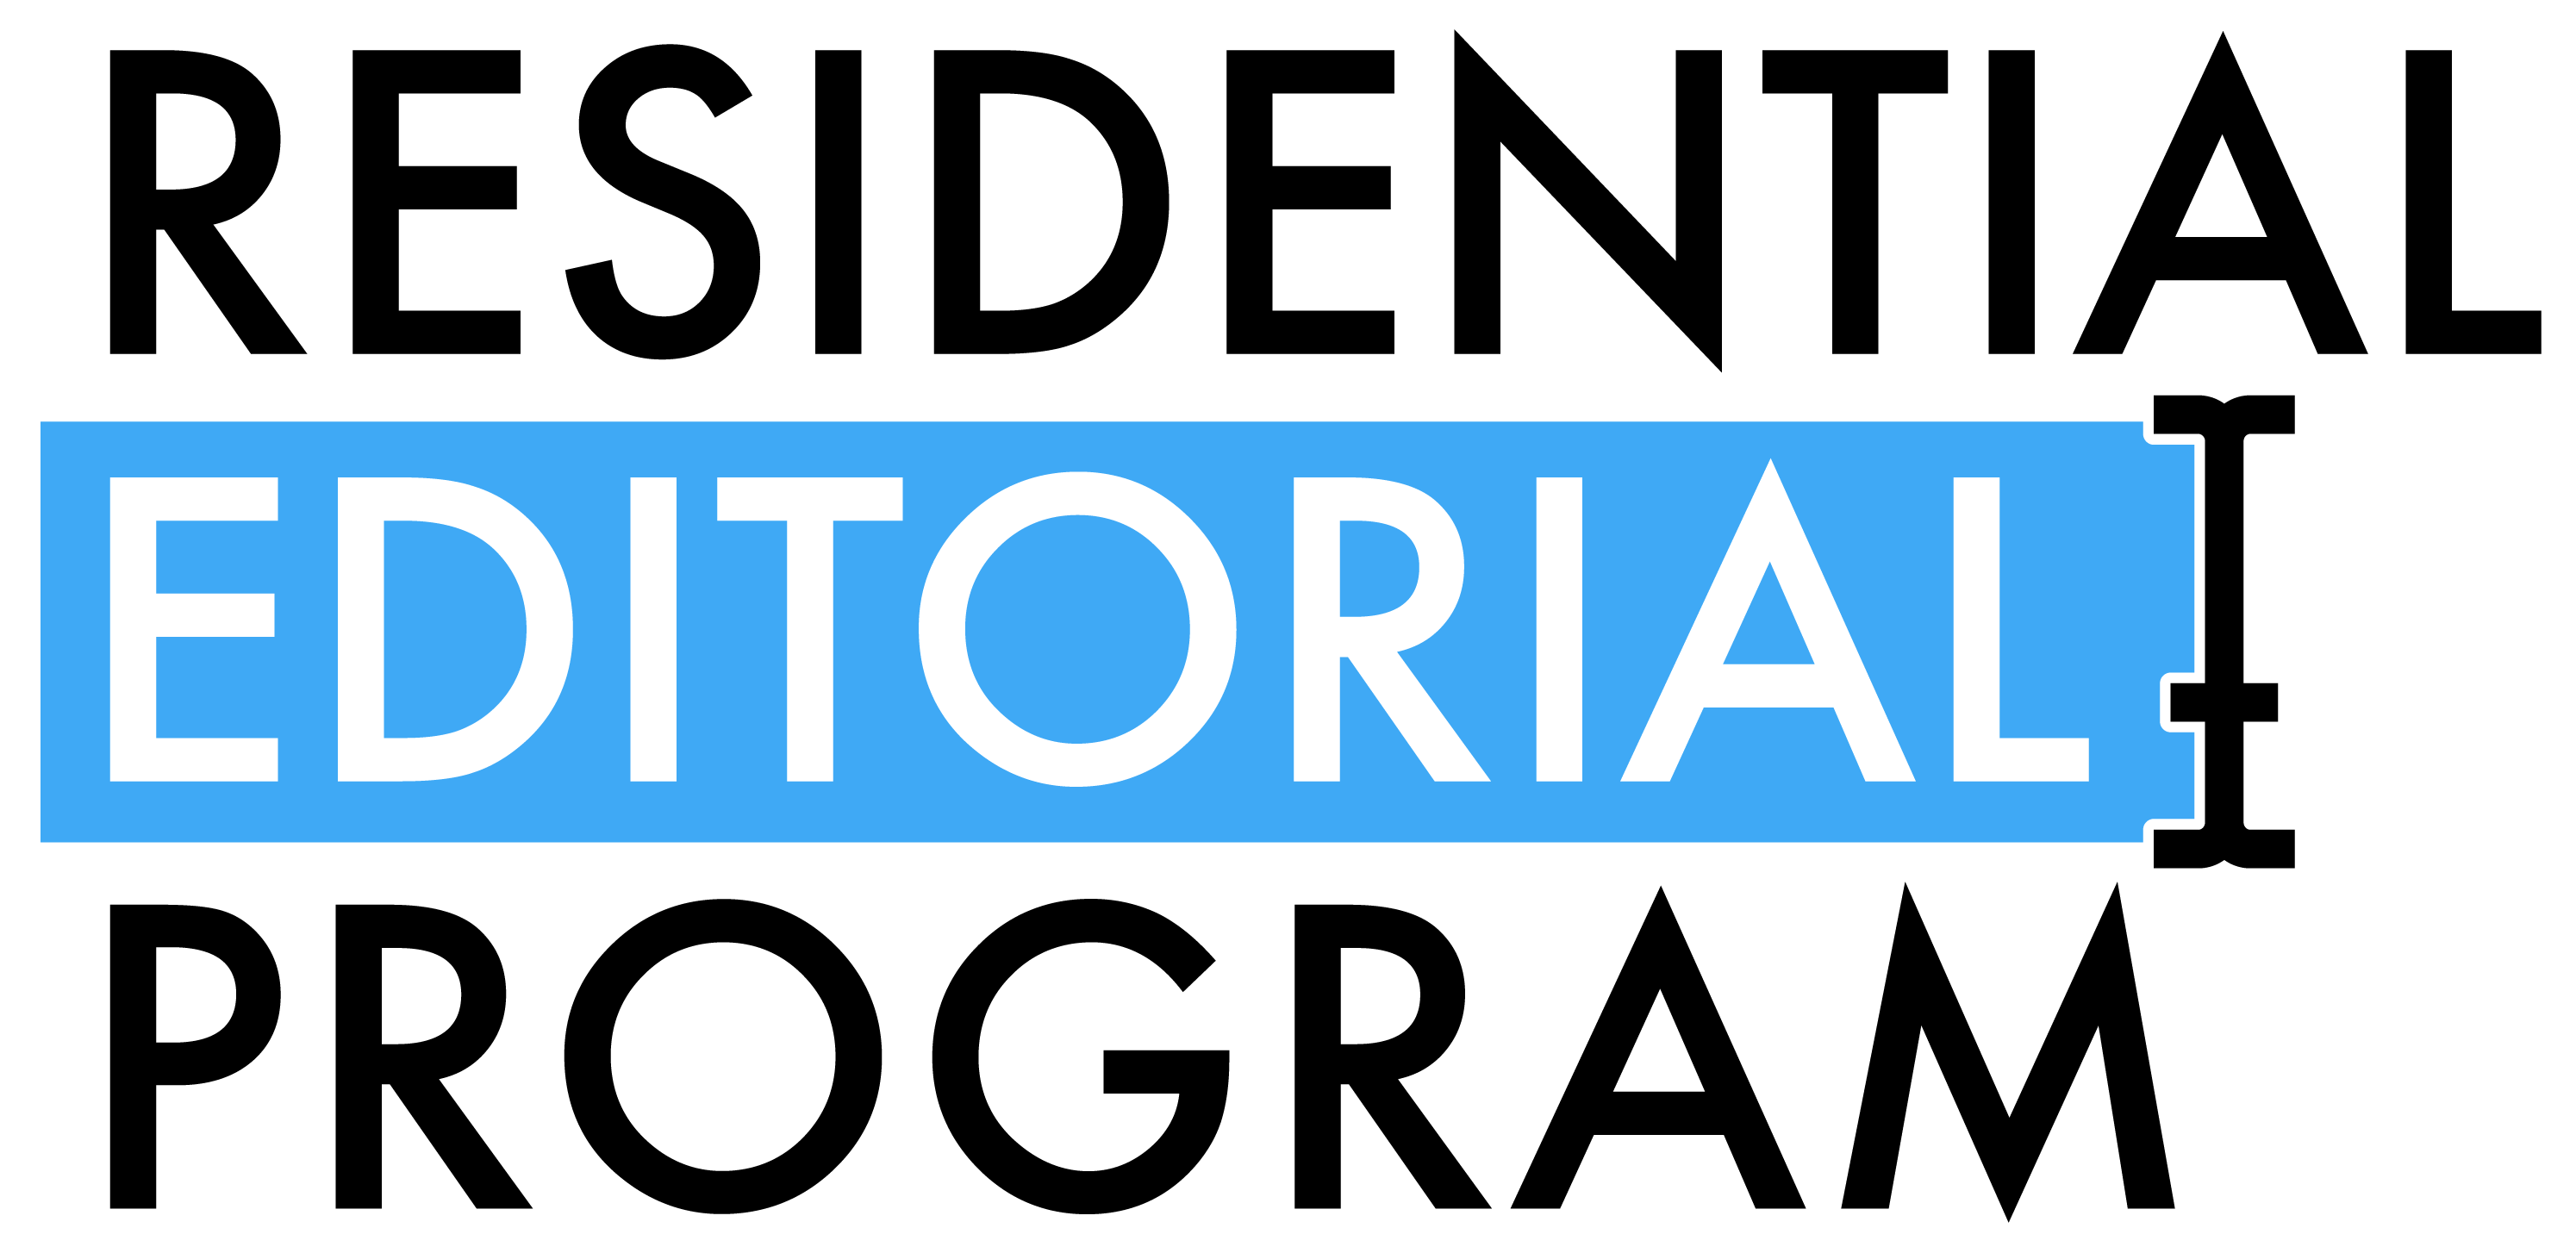 Residential Editorial Program logo